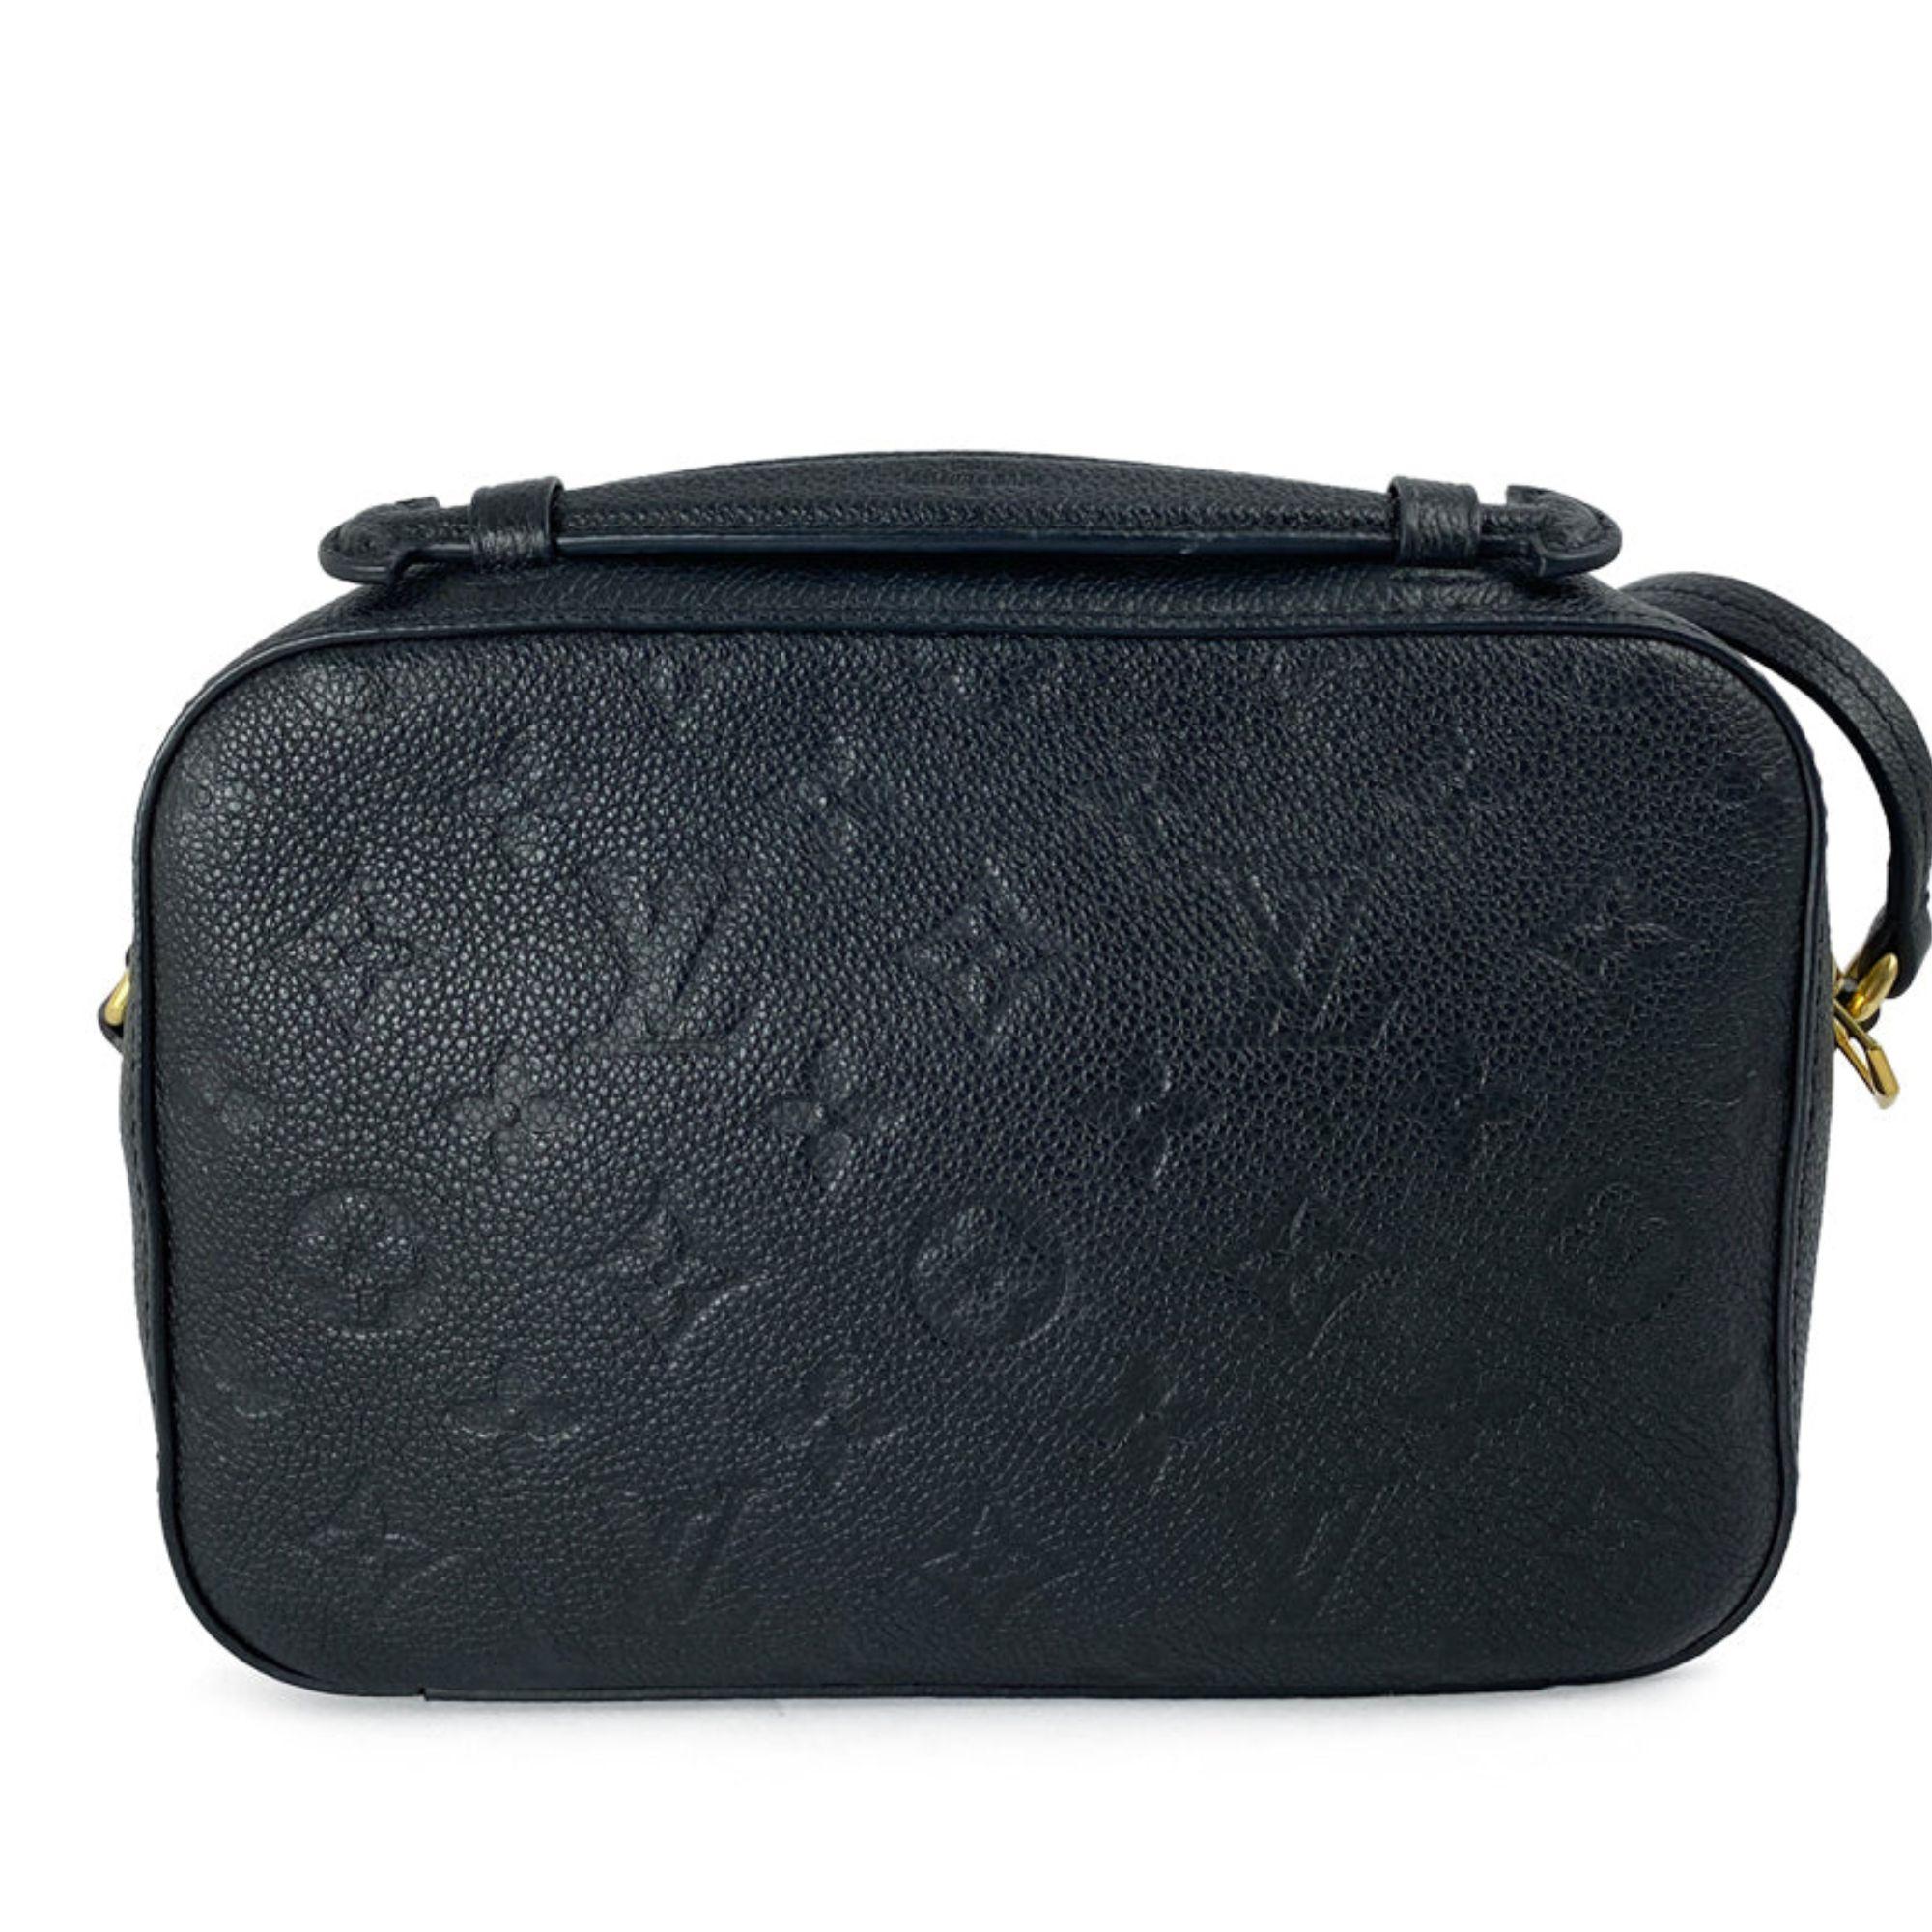 Black leather monogram embossed Louis Vuitton  Saintonge crossbody bag with logo plaque and tassel detail. Includes one slide pocket.

Measurements:
Height: 14cm
Width: 22cm
Depth: 7cm
Handle Drop: 6cm
Overall condition: excellent 
Interior